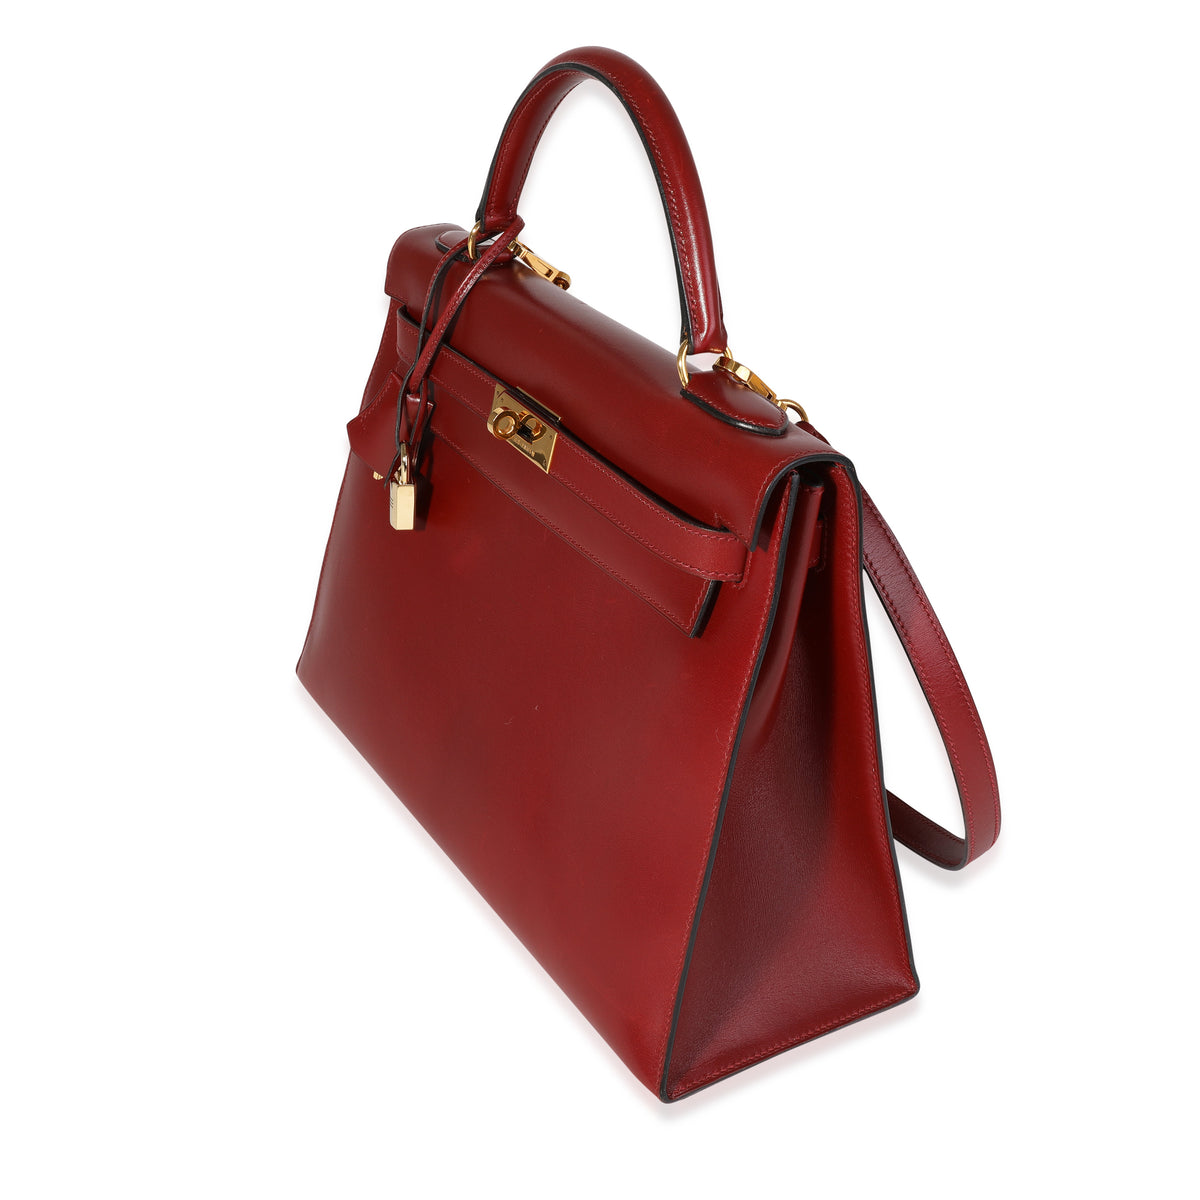 HERMES Vintage Kelly Sellier 32 Box Leather Satchel Bag Red